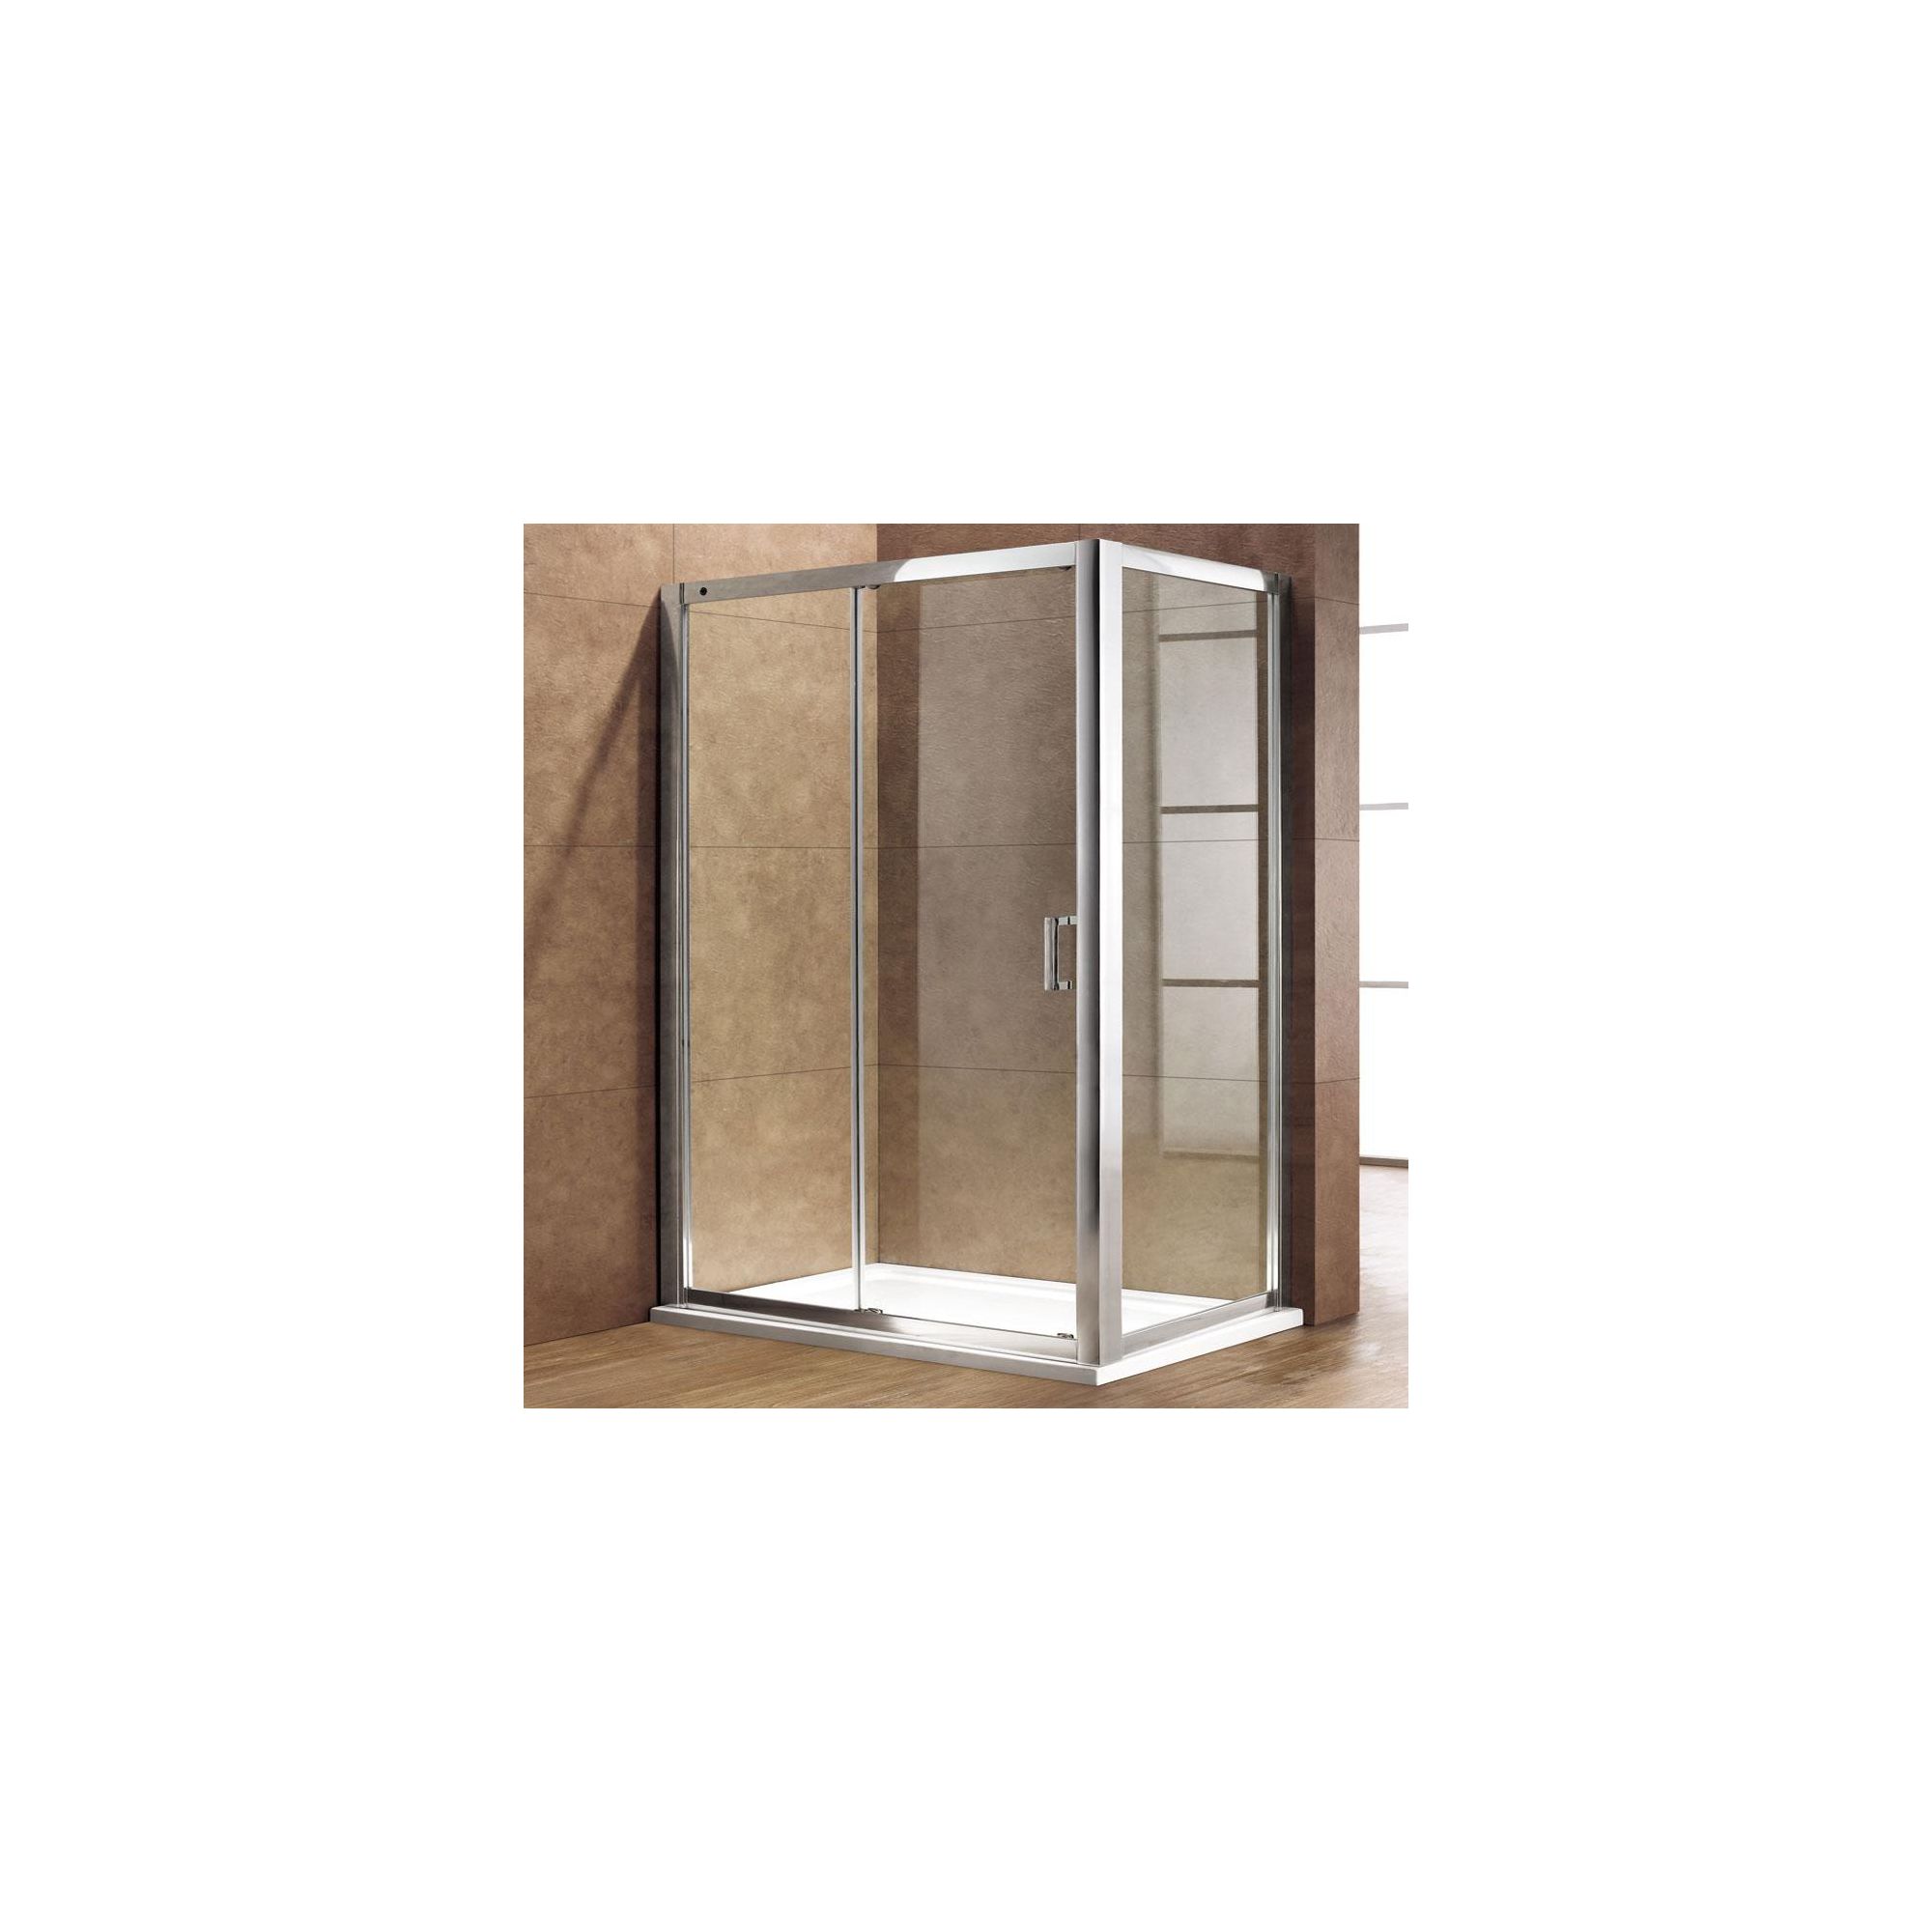 Duchy Premium Single Sliding Shower Door, 1700mm Wide, 8mm Glass at Tesco Direct